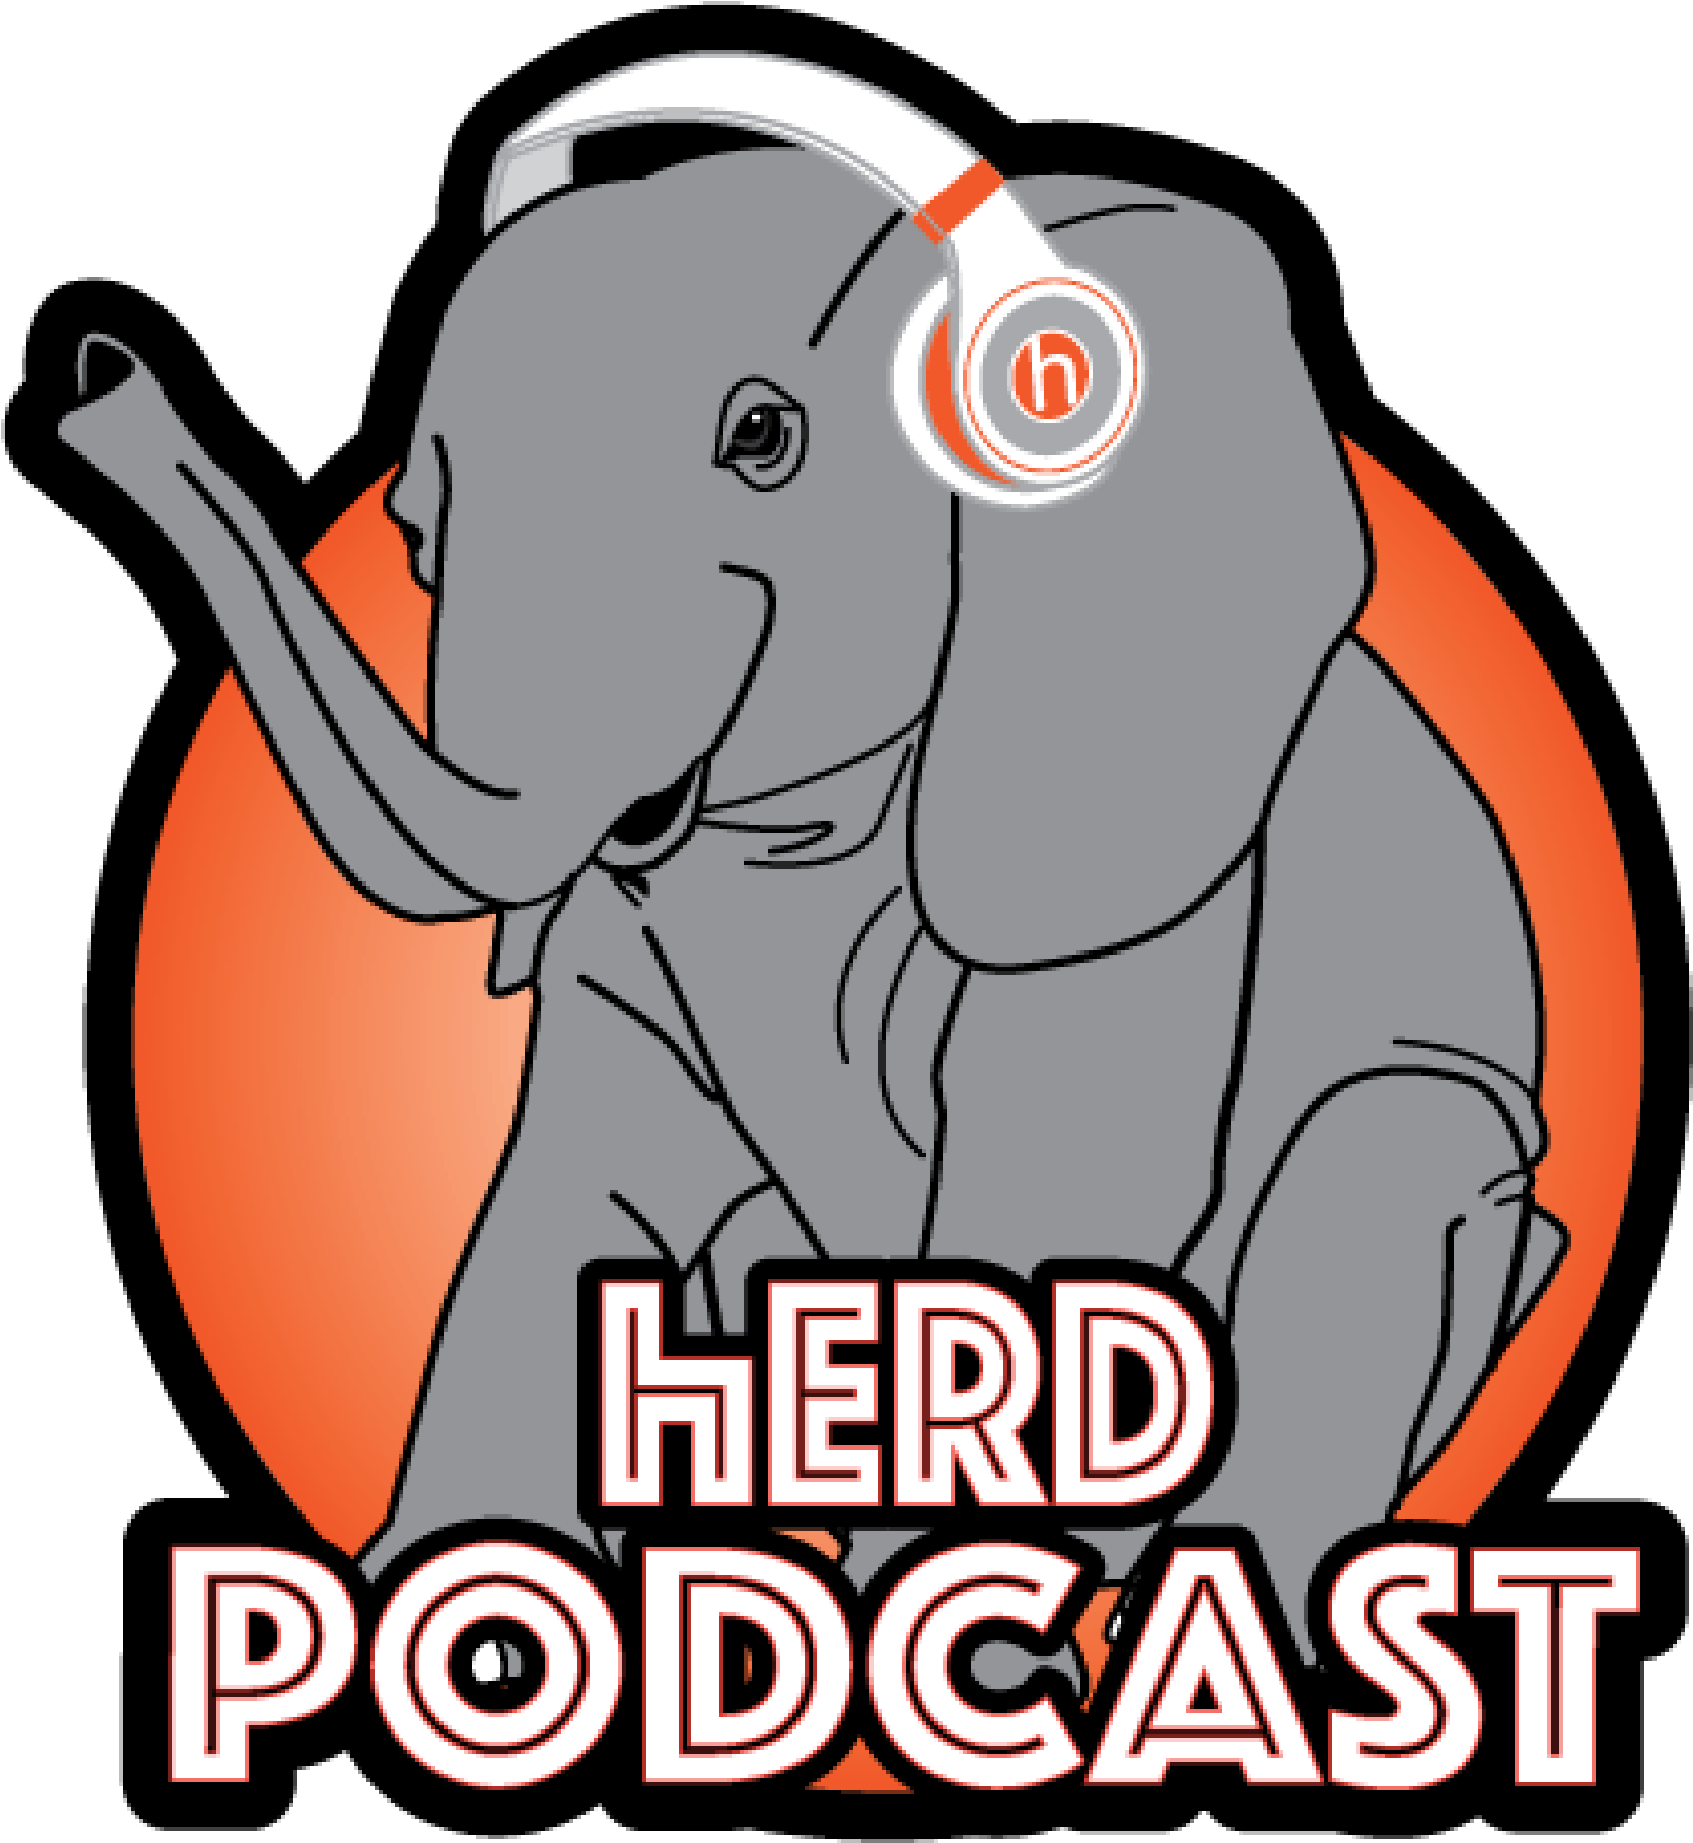 Elephant Run District's Herd Podcast - Elephant Run District's Herd Podcast (2000x2118)